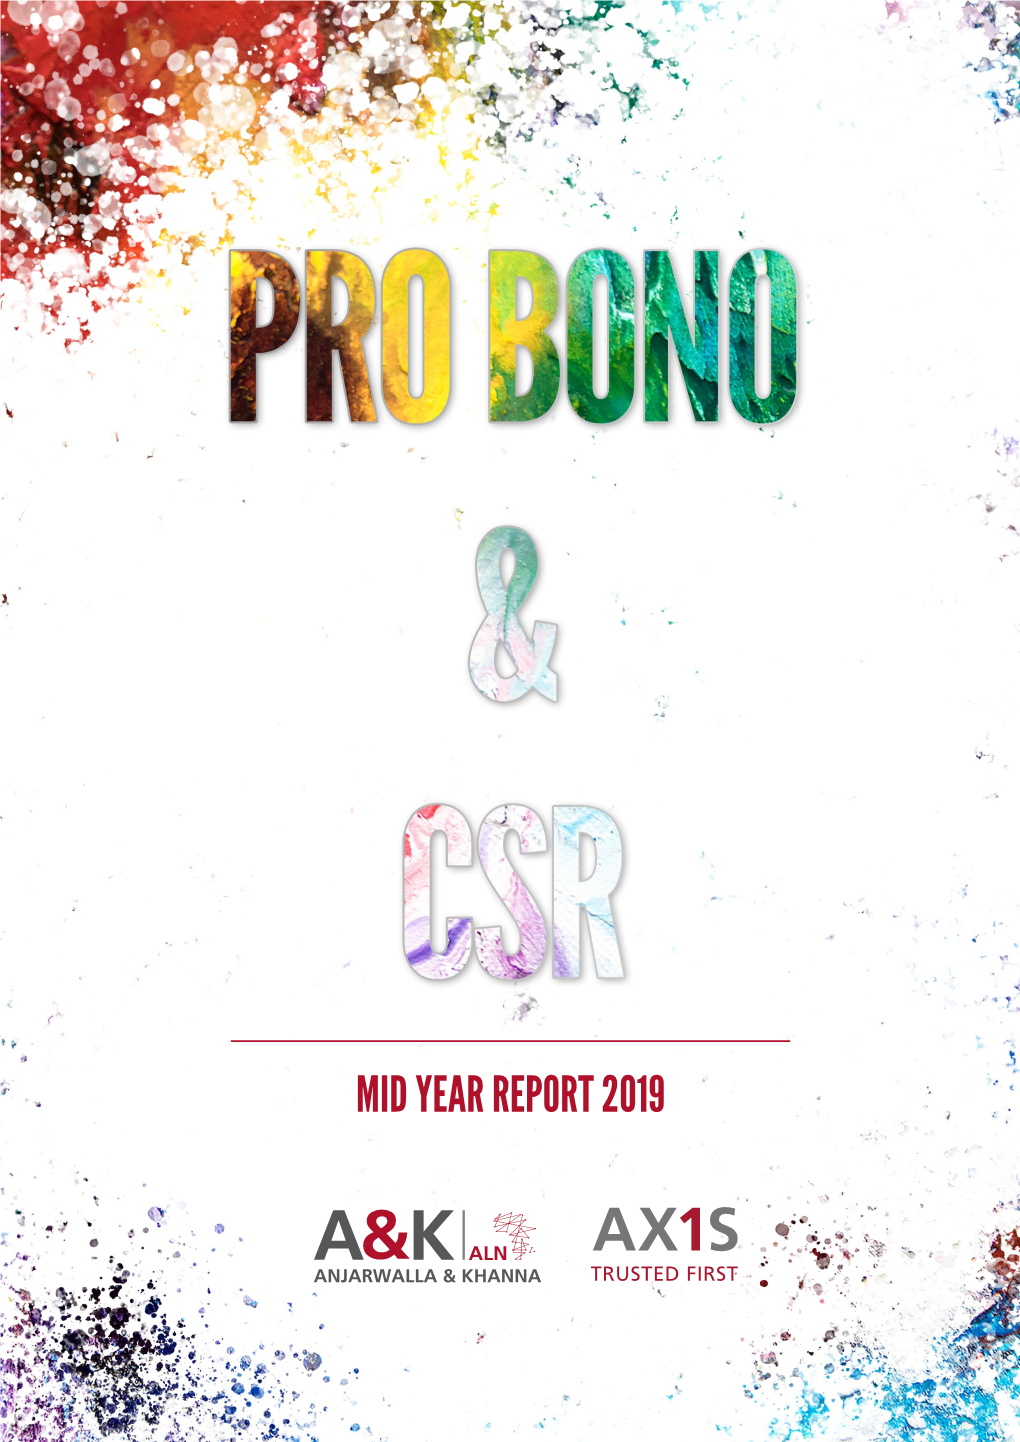 Mid Year Report 2019 2 Pro Bono & Csr Mid Year Report 2019